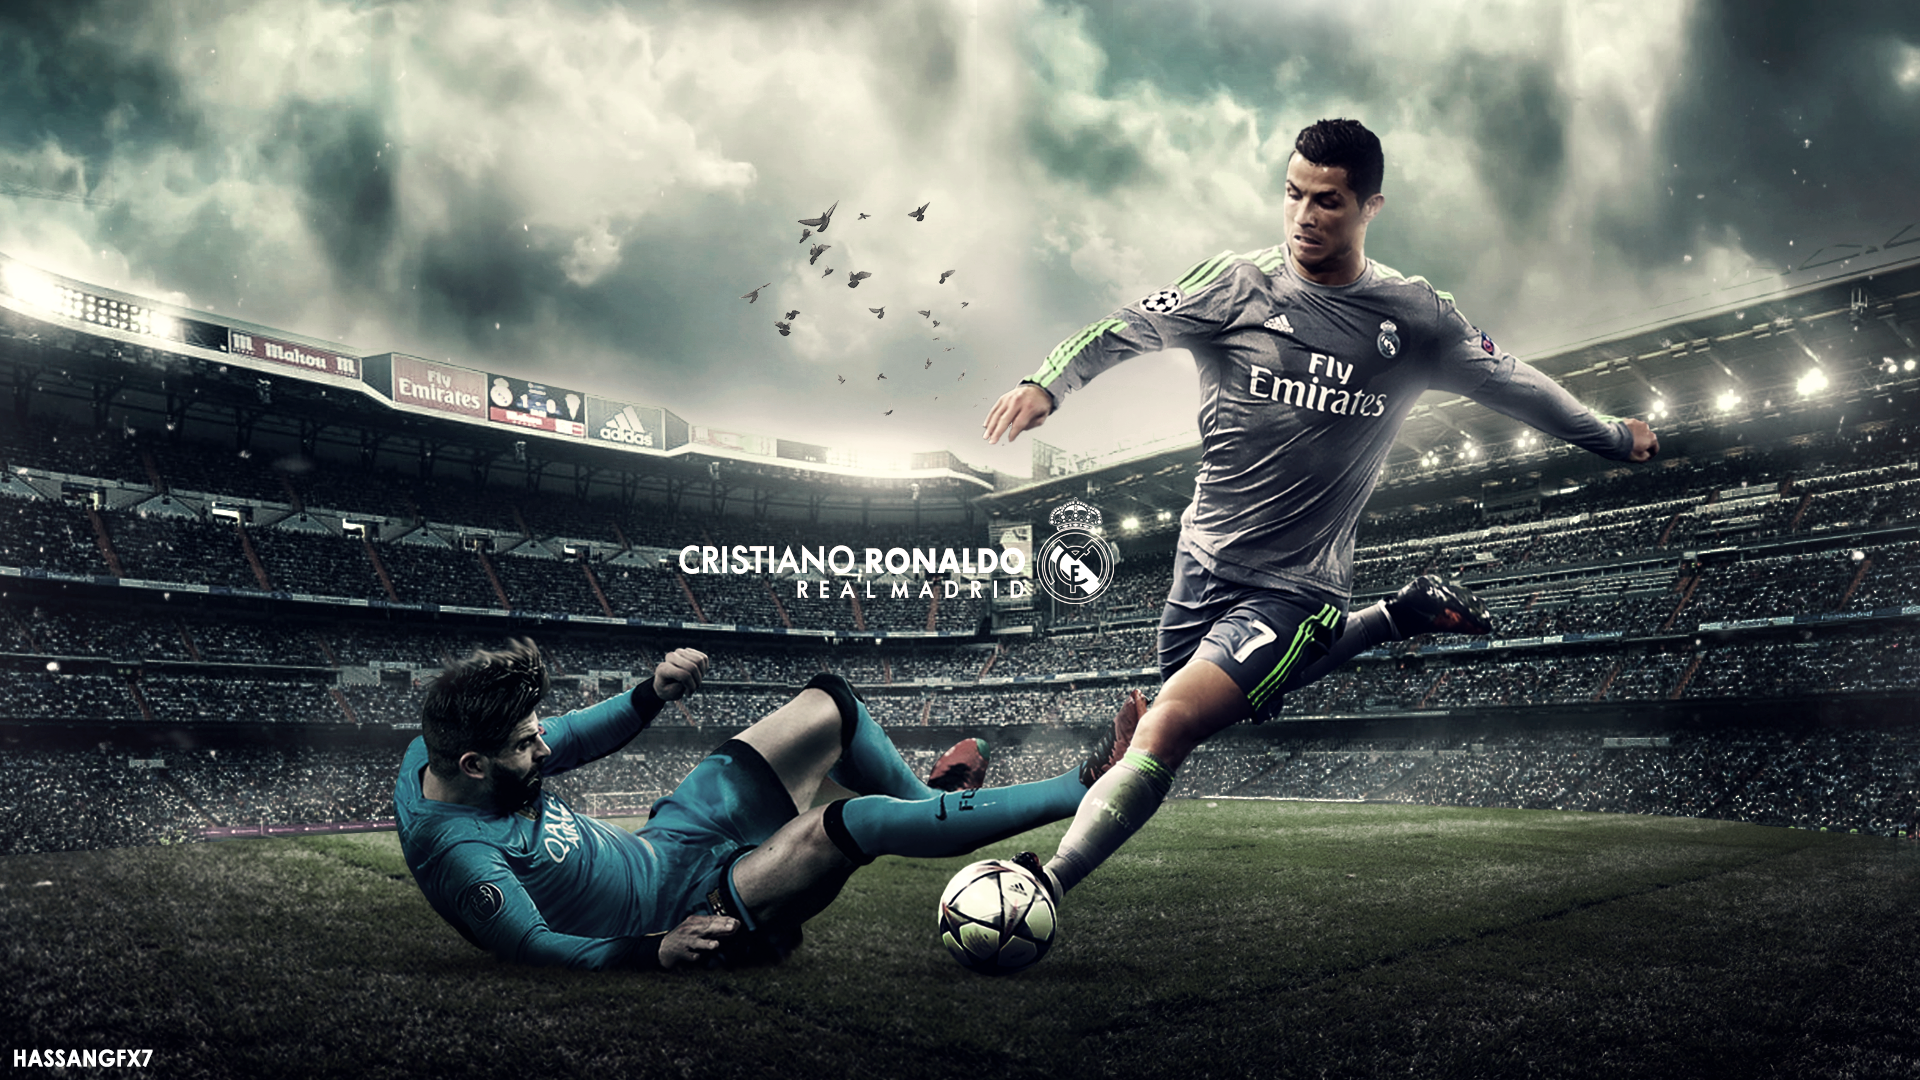 Cristiano Ronaldo Wallpaper By Hassangfx7 On